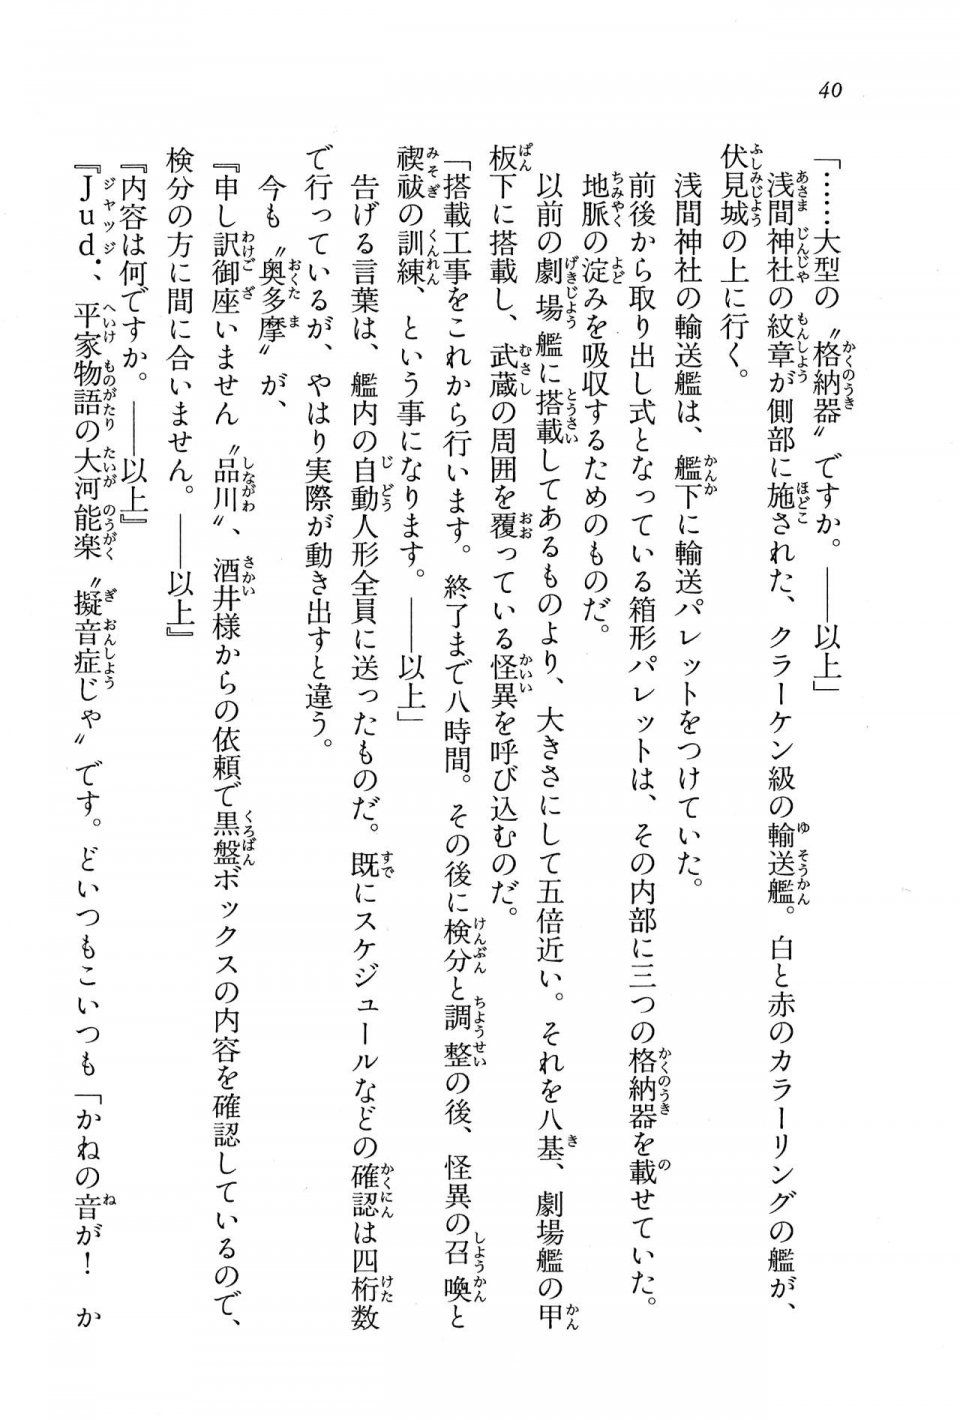 Kyoukai Senjou no Horizon BD Special Mininovel Vol 8(4B) - Photo #44